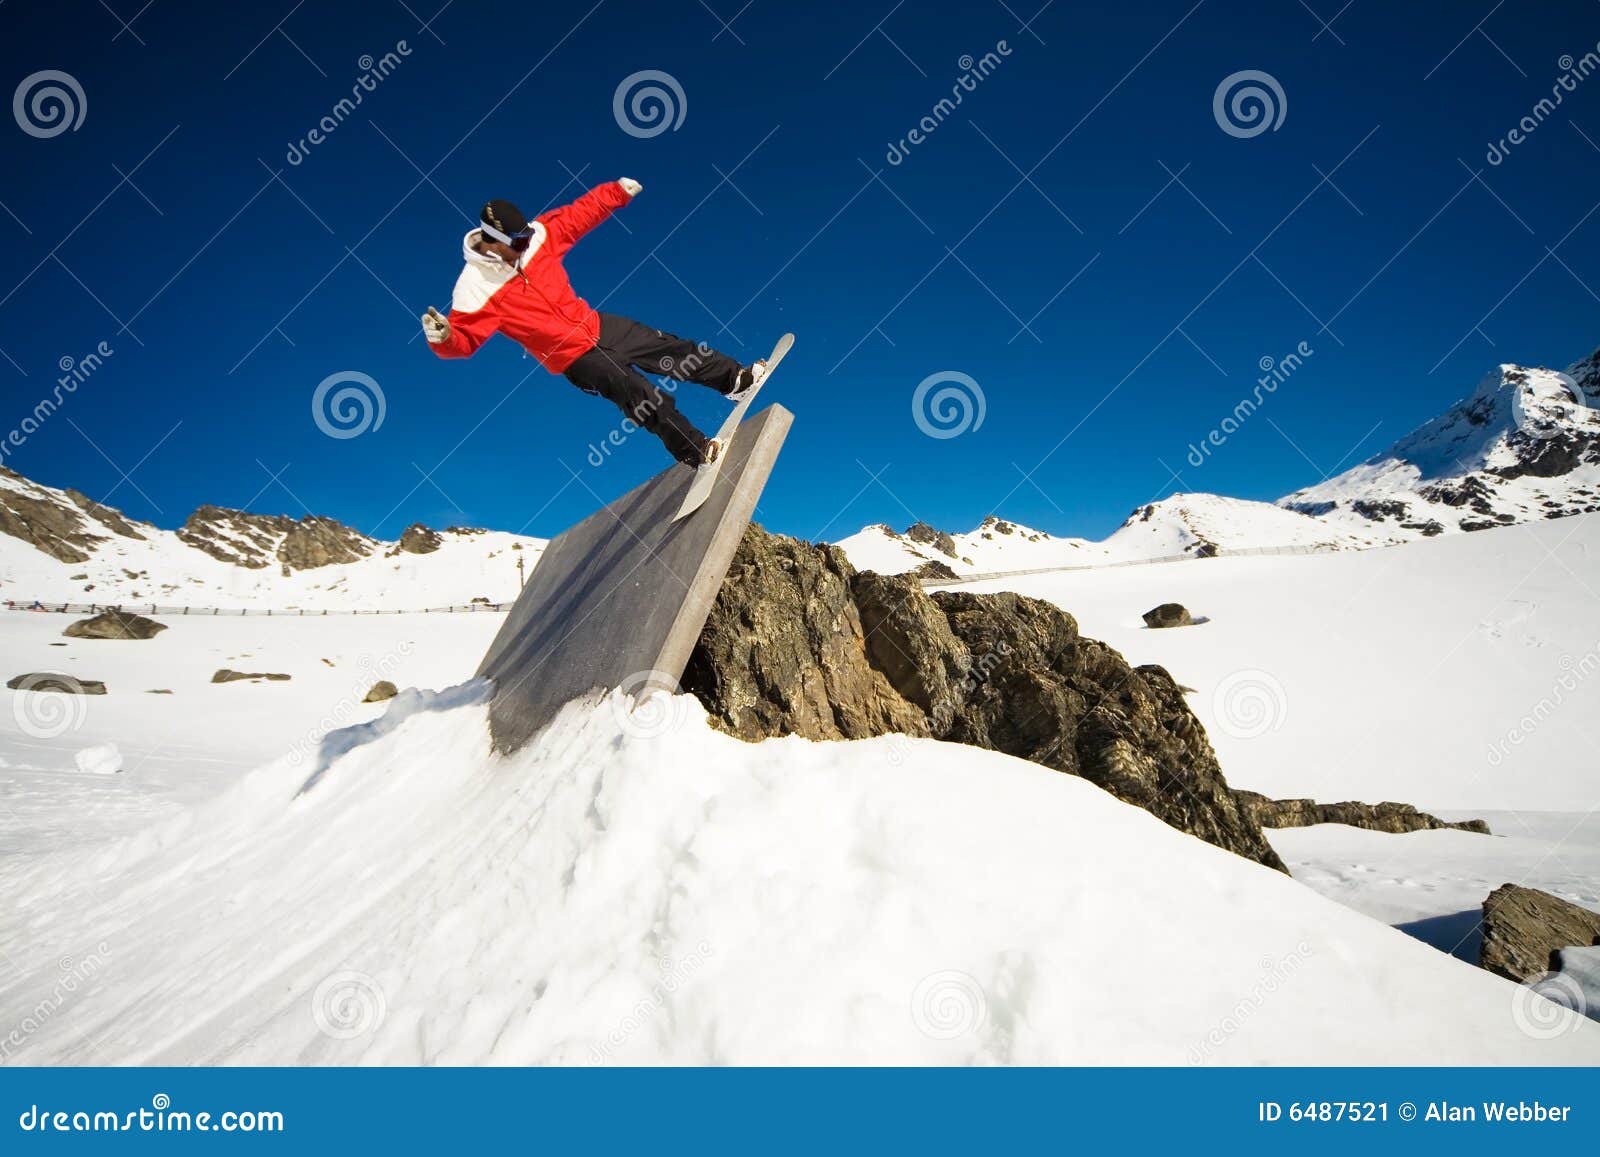 Snowboard Wall Ride Stock Image Image 6487521 pertaining to Snowboard Wall Ride Tricks